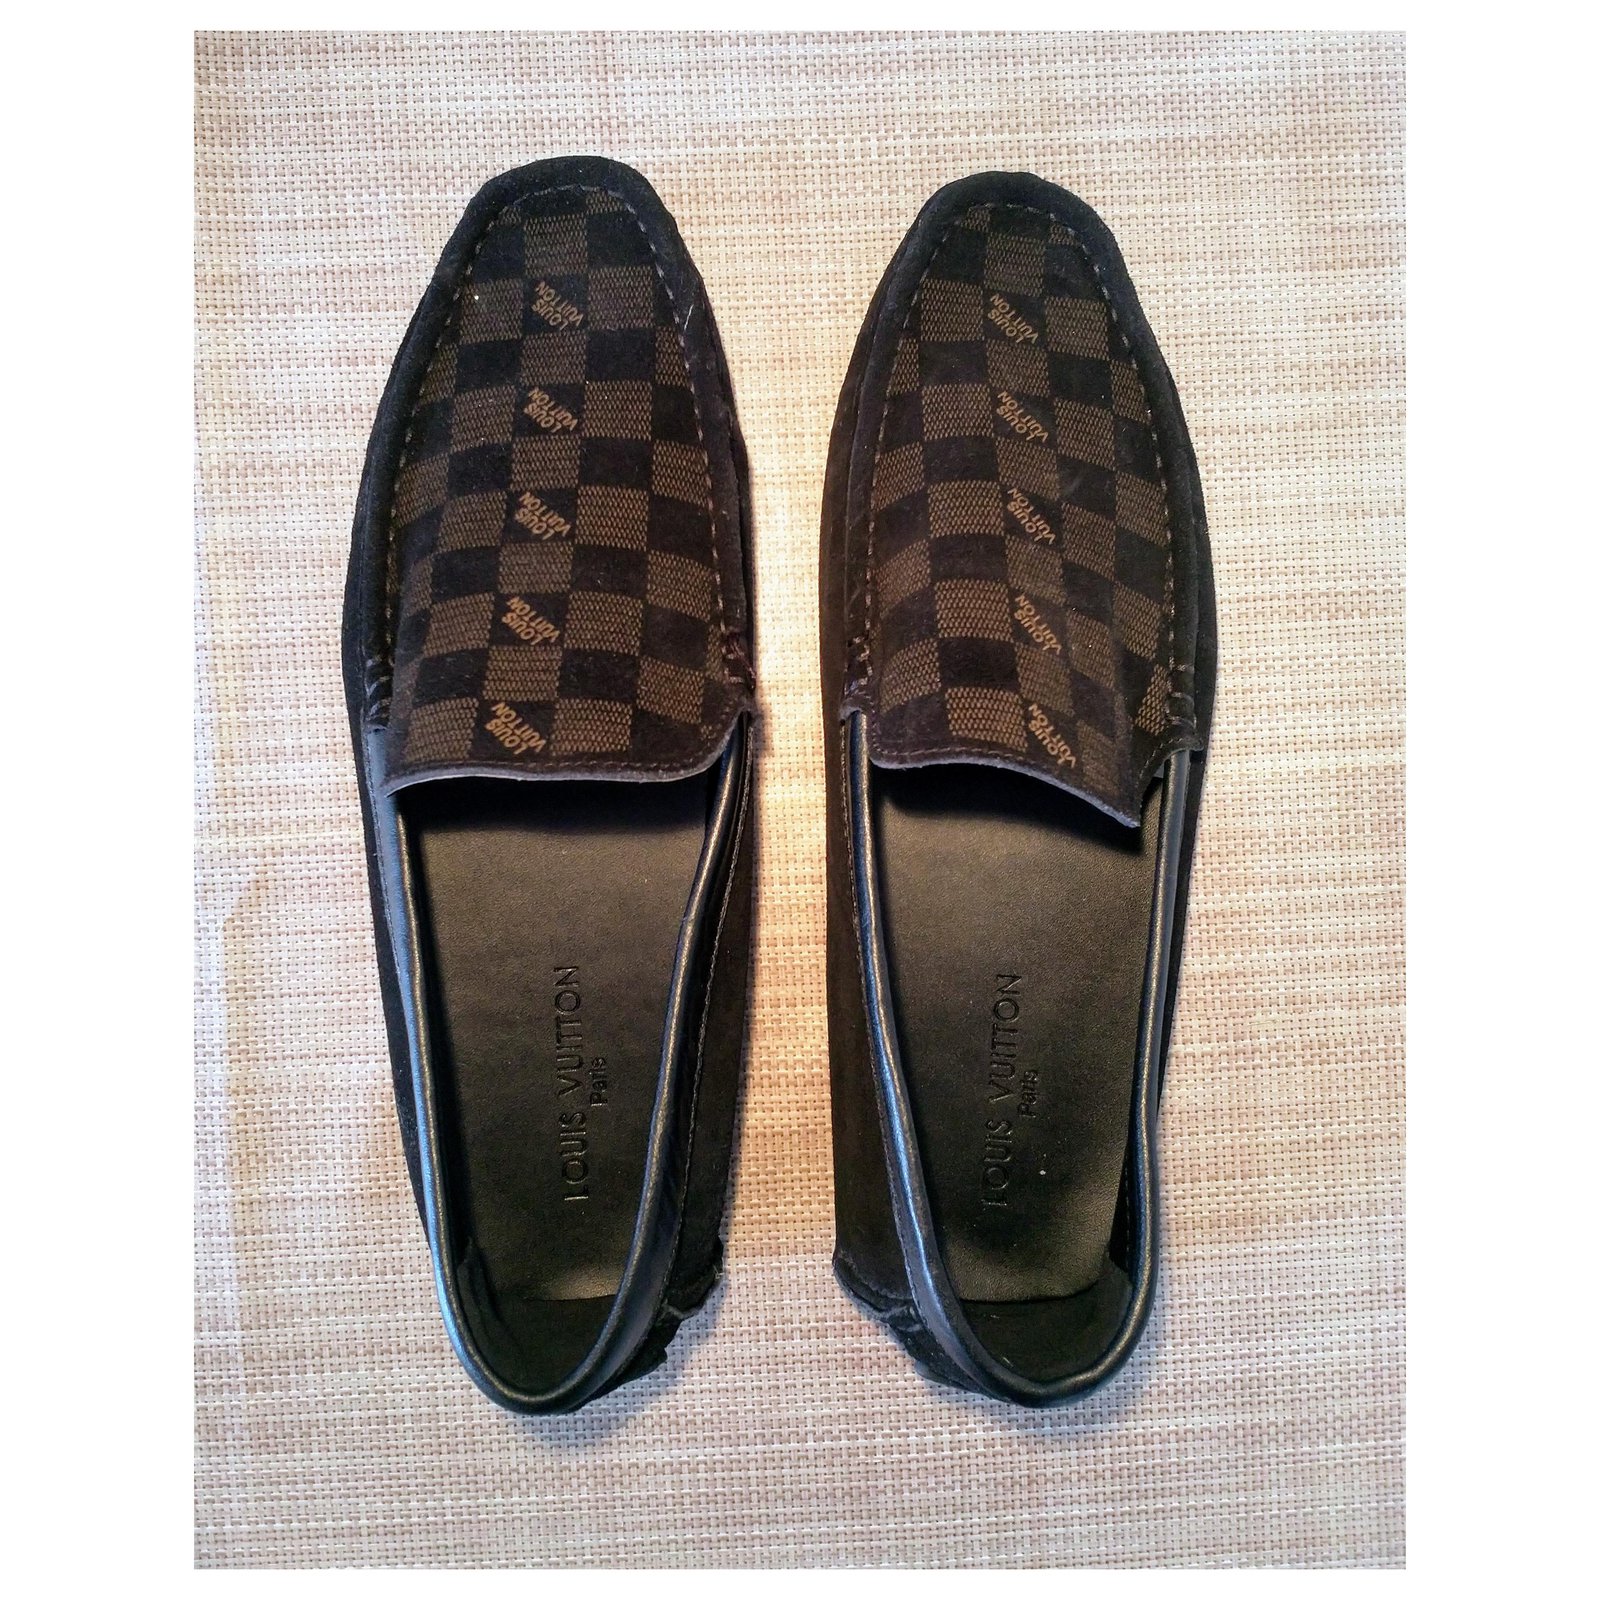 Louis Vuitton Hockenheim Damier Graphite Shoes size 7.5 USA